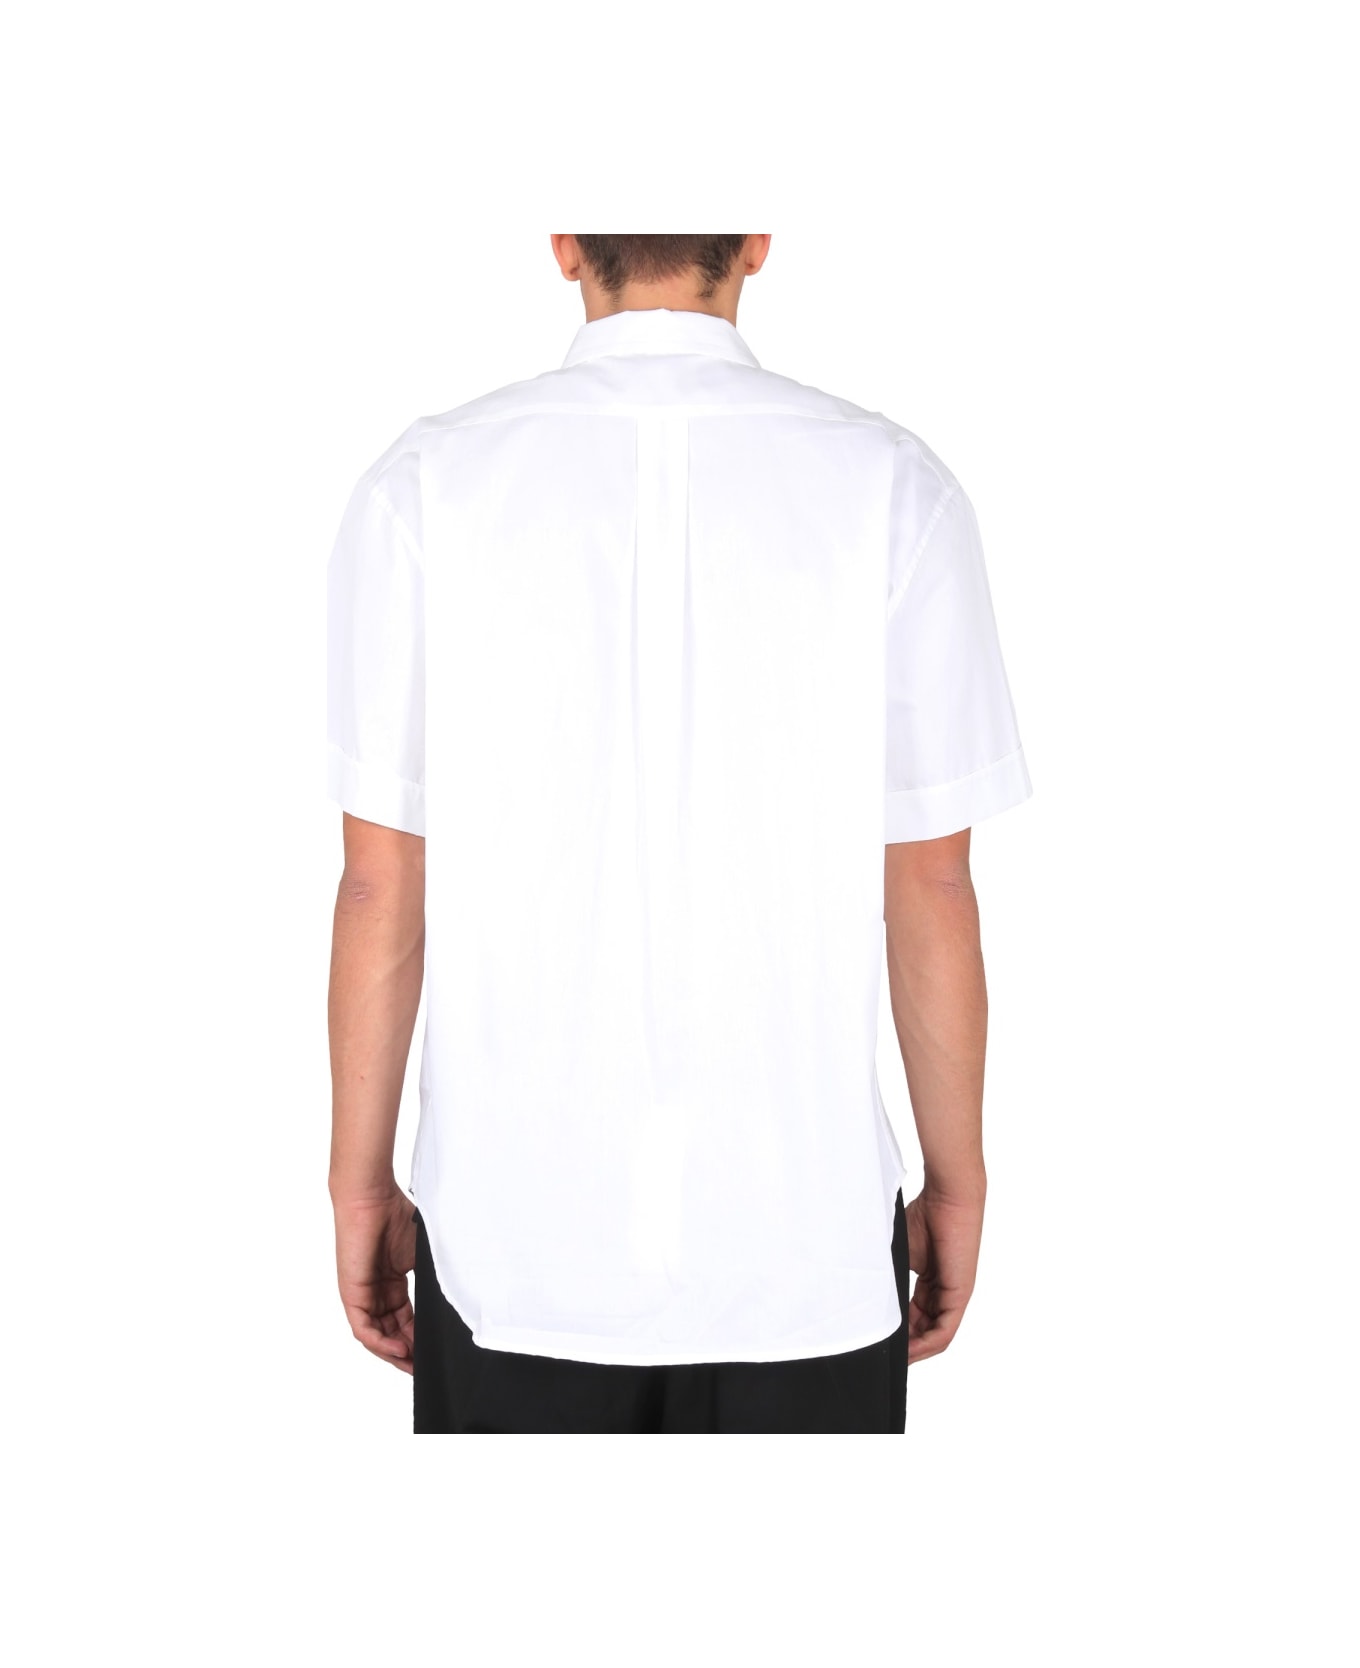 ih nom uh nit Shirt With Pocket - WHITE シャツ